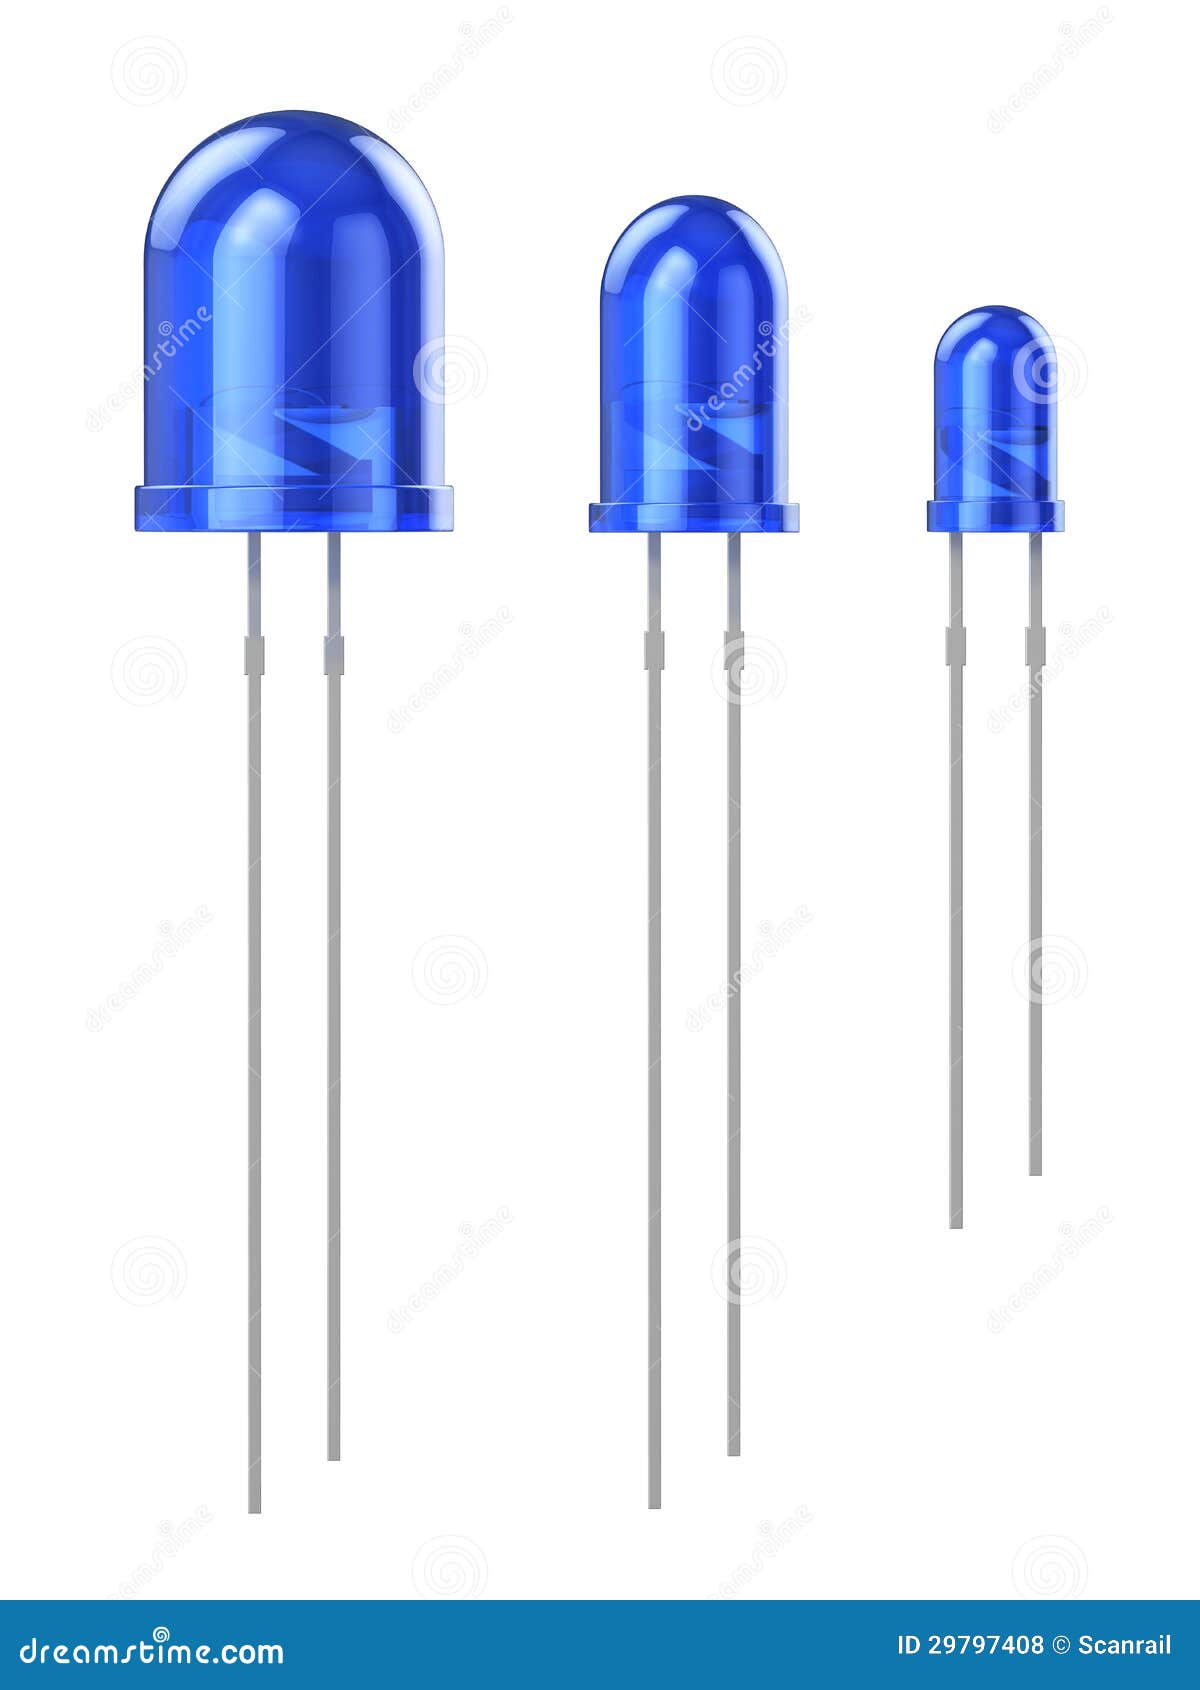 set of blue leds